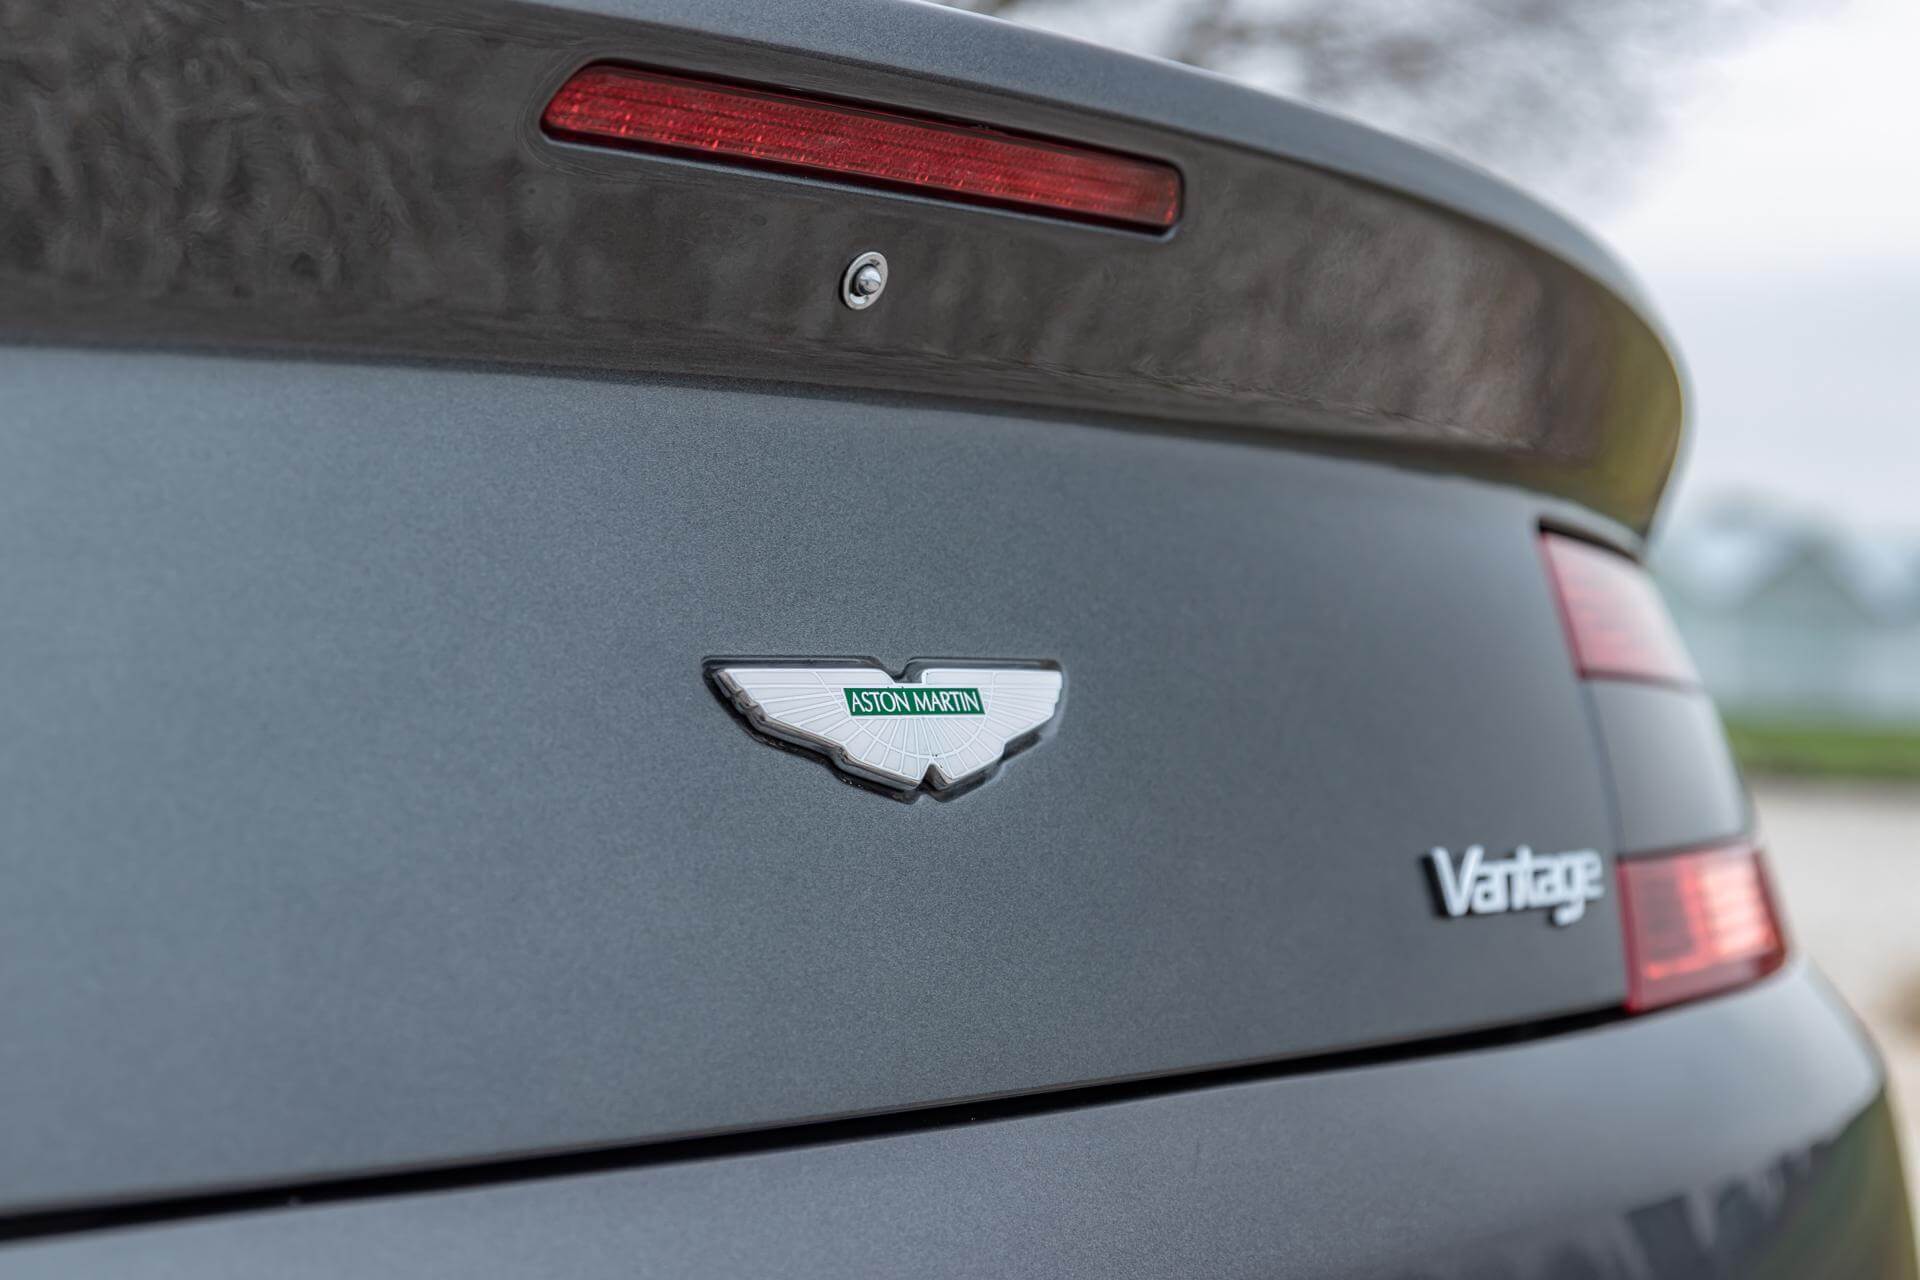 Real Art on Wheels | Aston Martin V8 Vantage